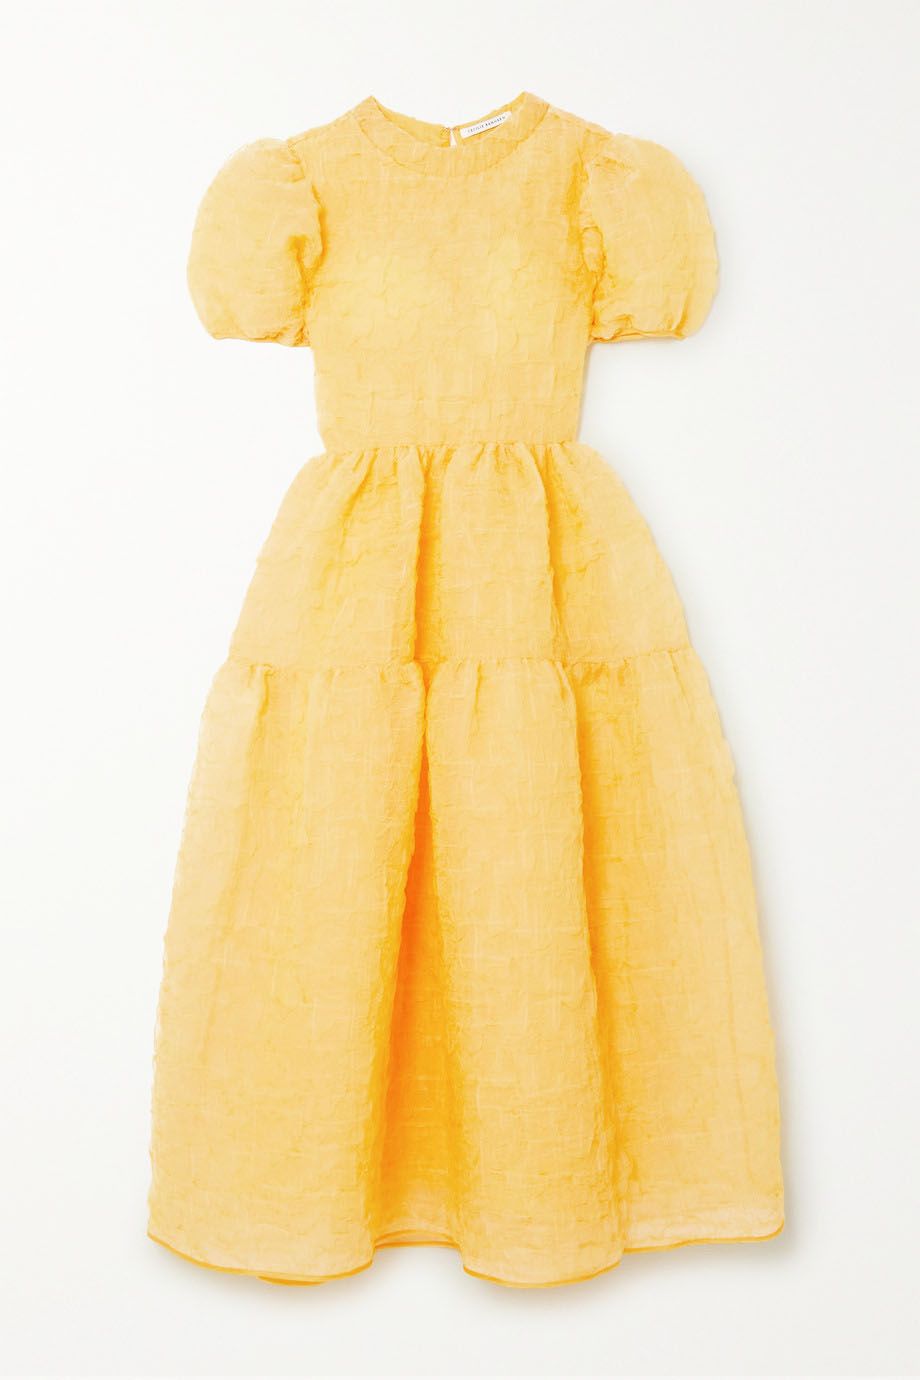 zara yellow spot dress